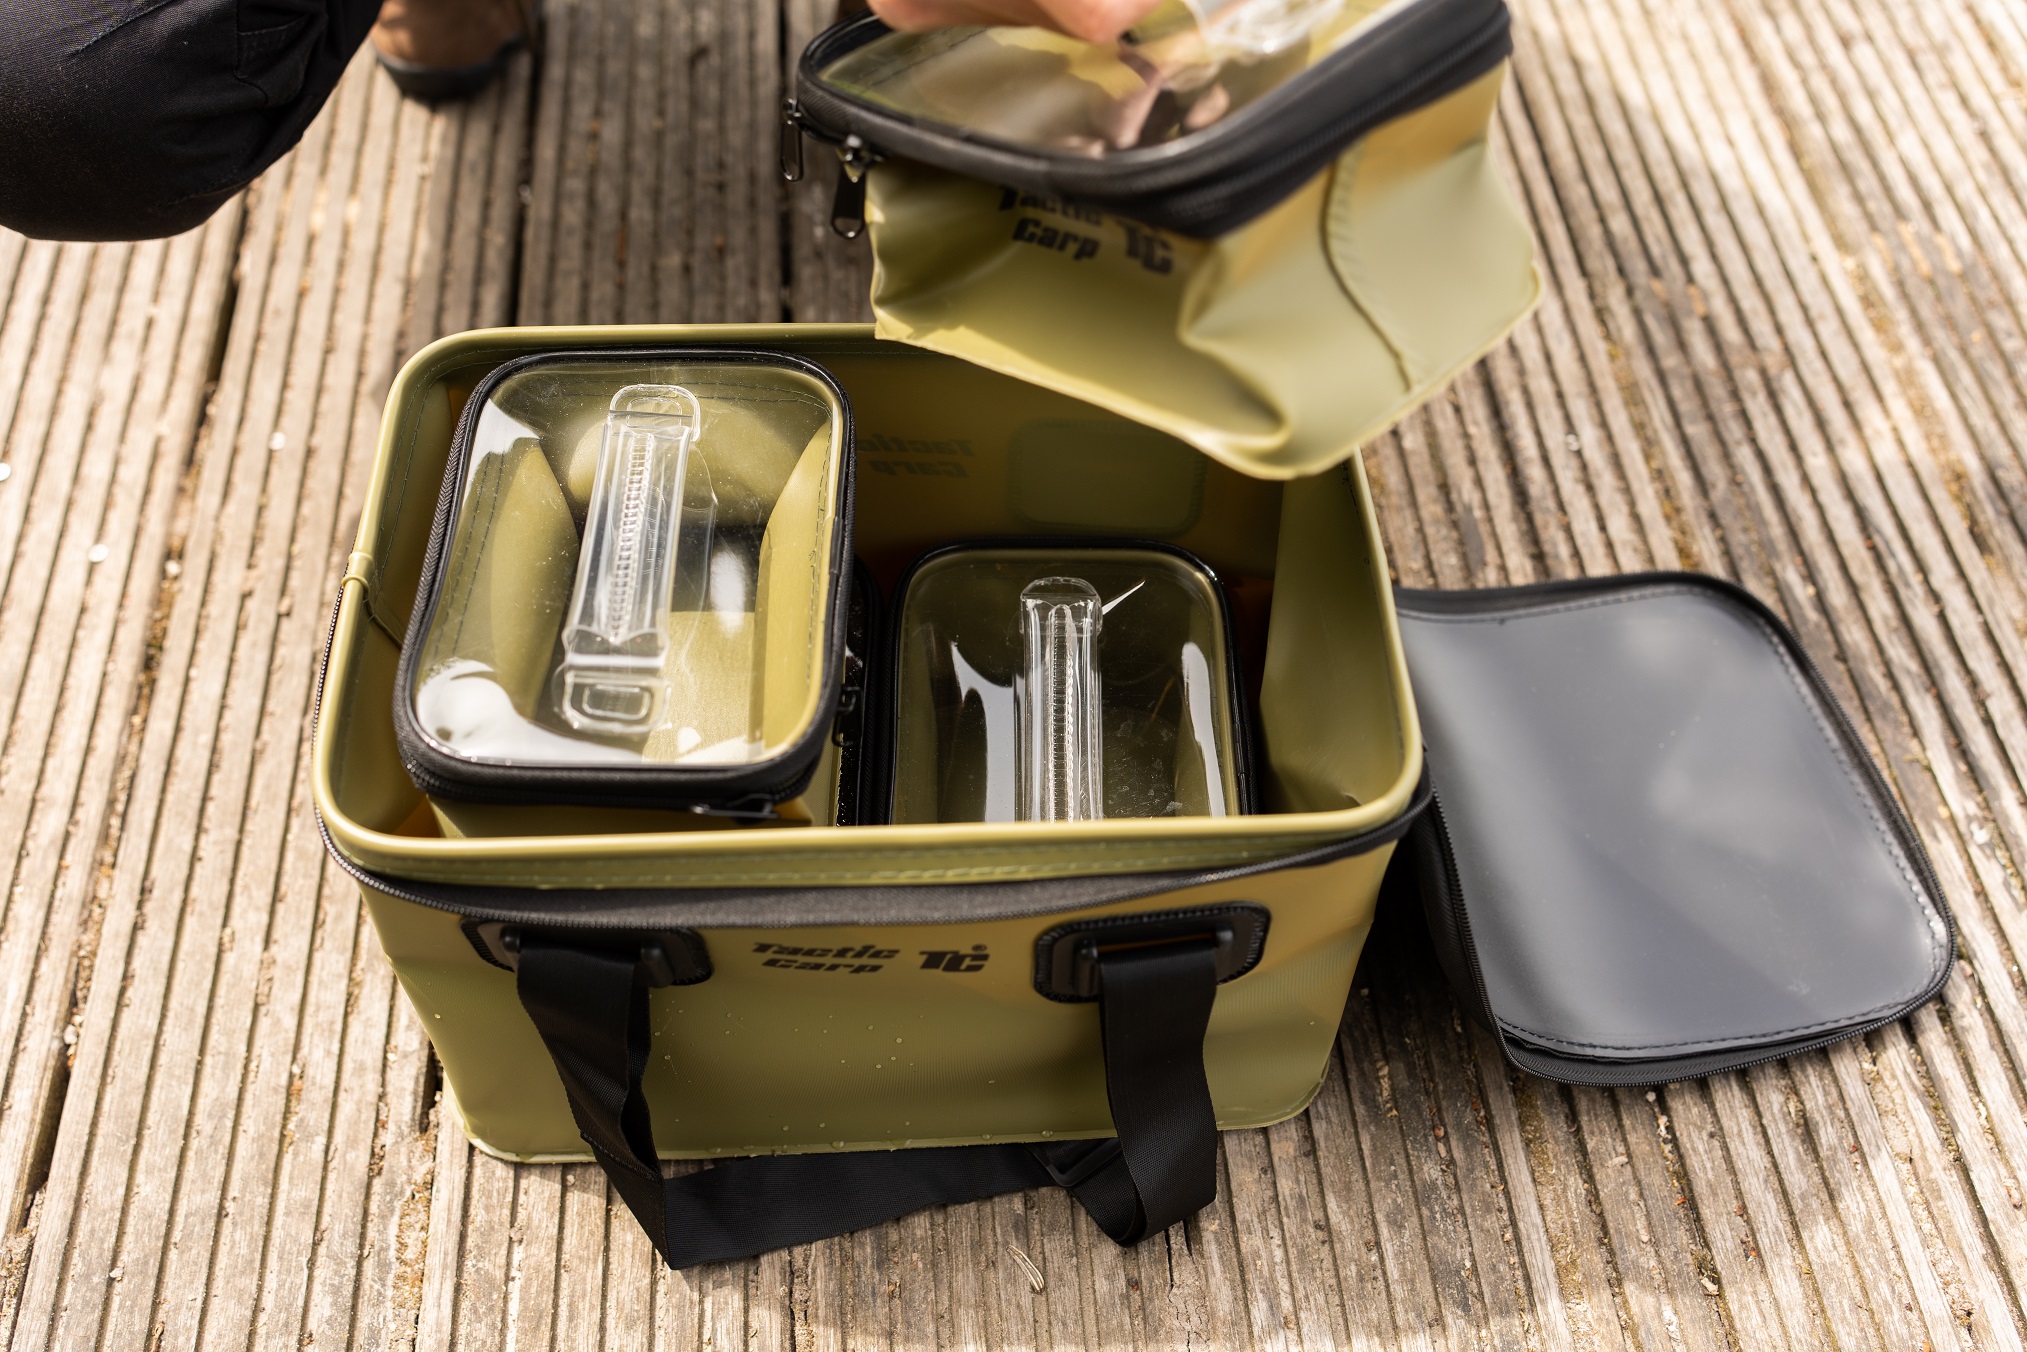 Tactic Carp Waterproof Luggage Waterdichte Tassen